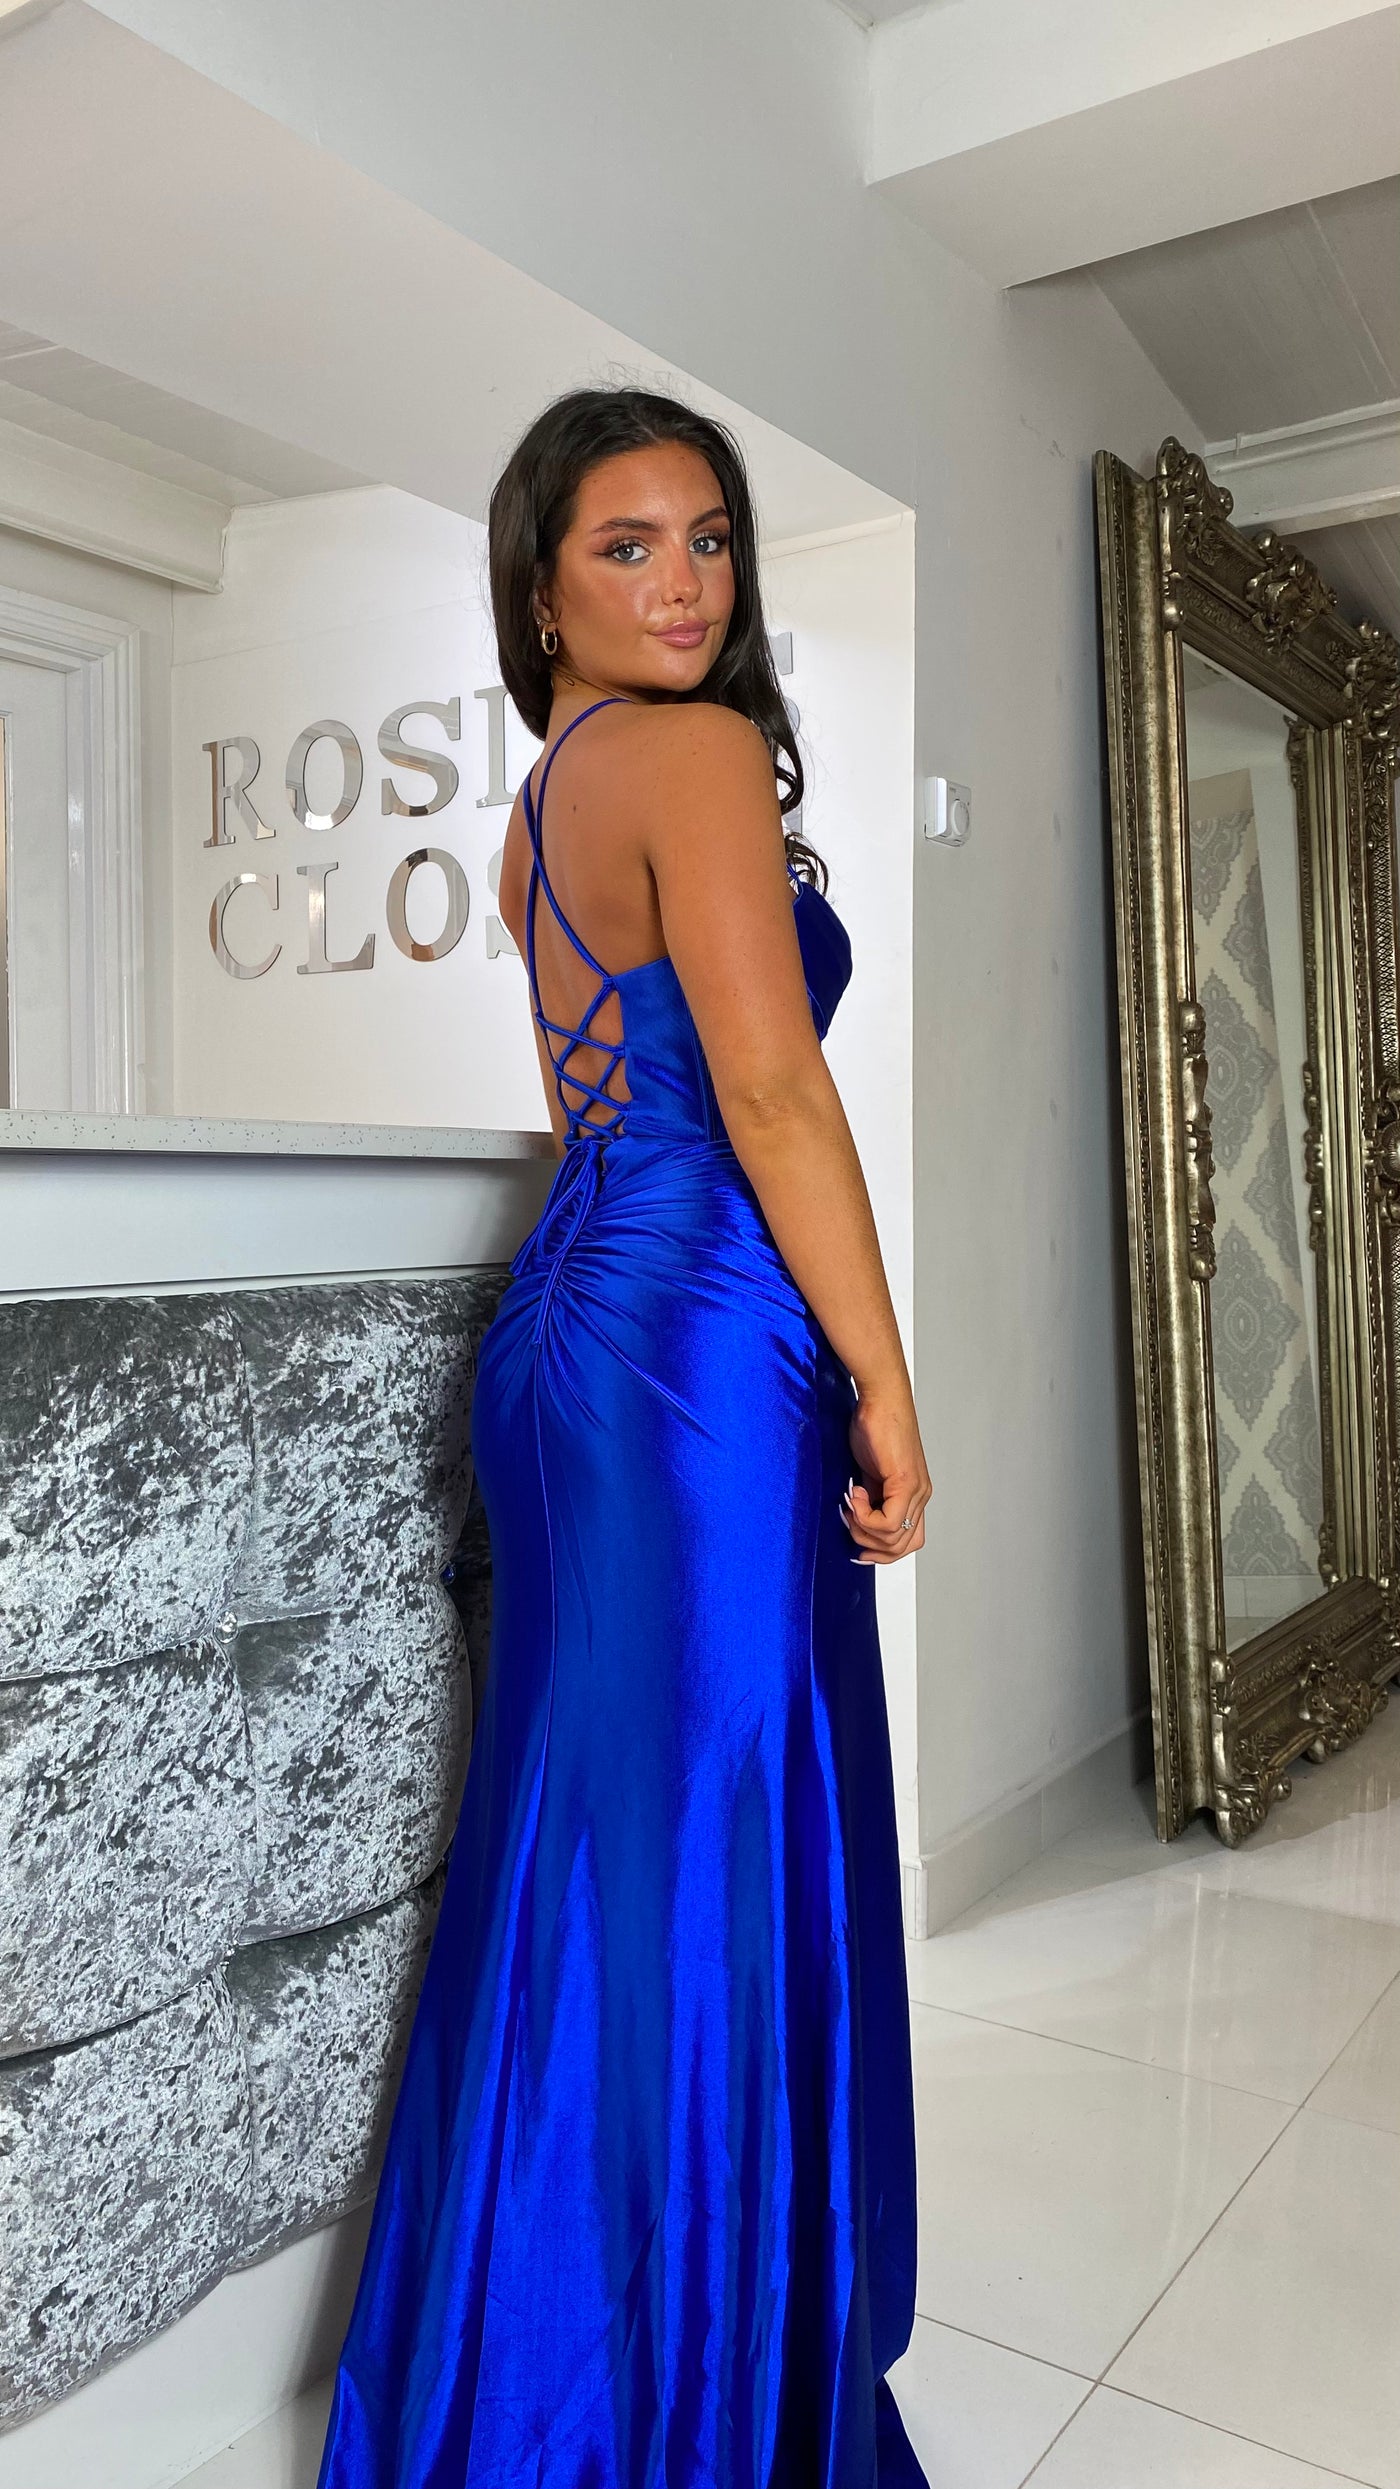 Cobalt Blue Satin Corset Style Full Length Gown